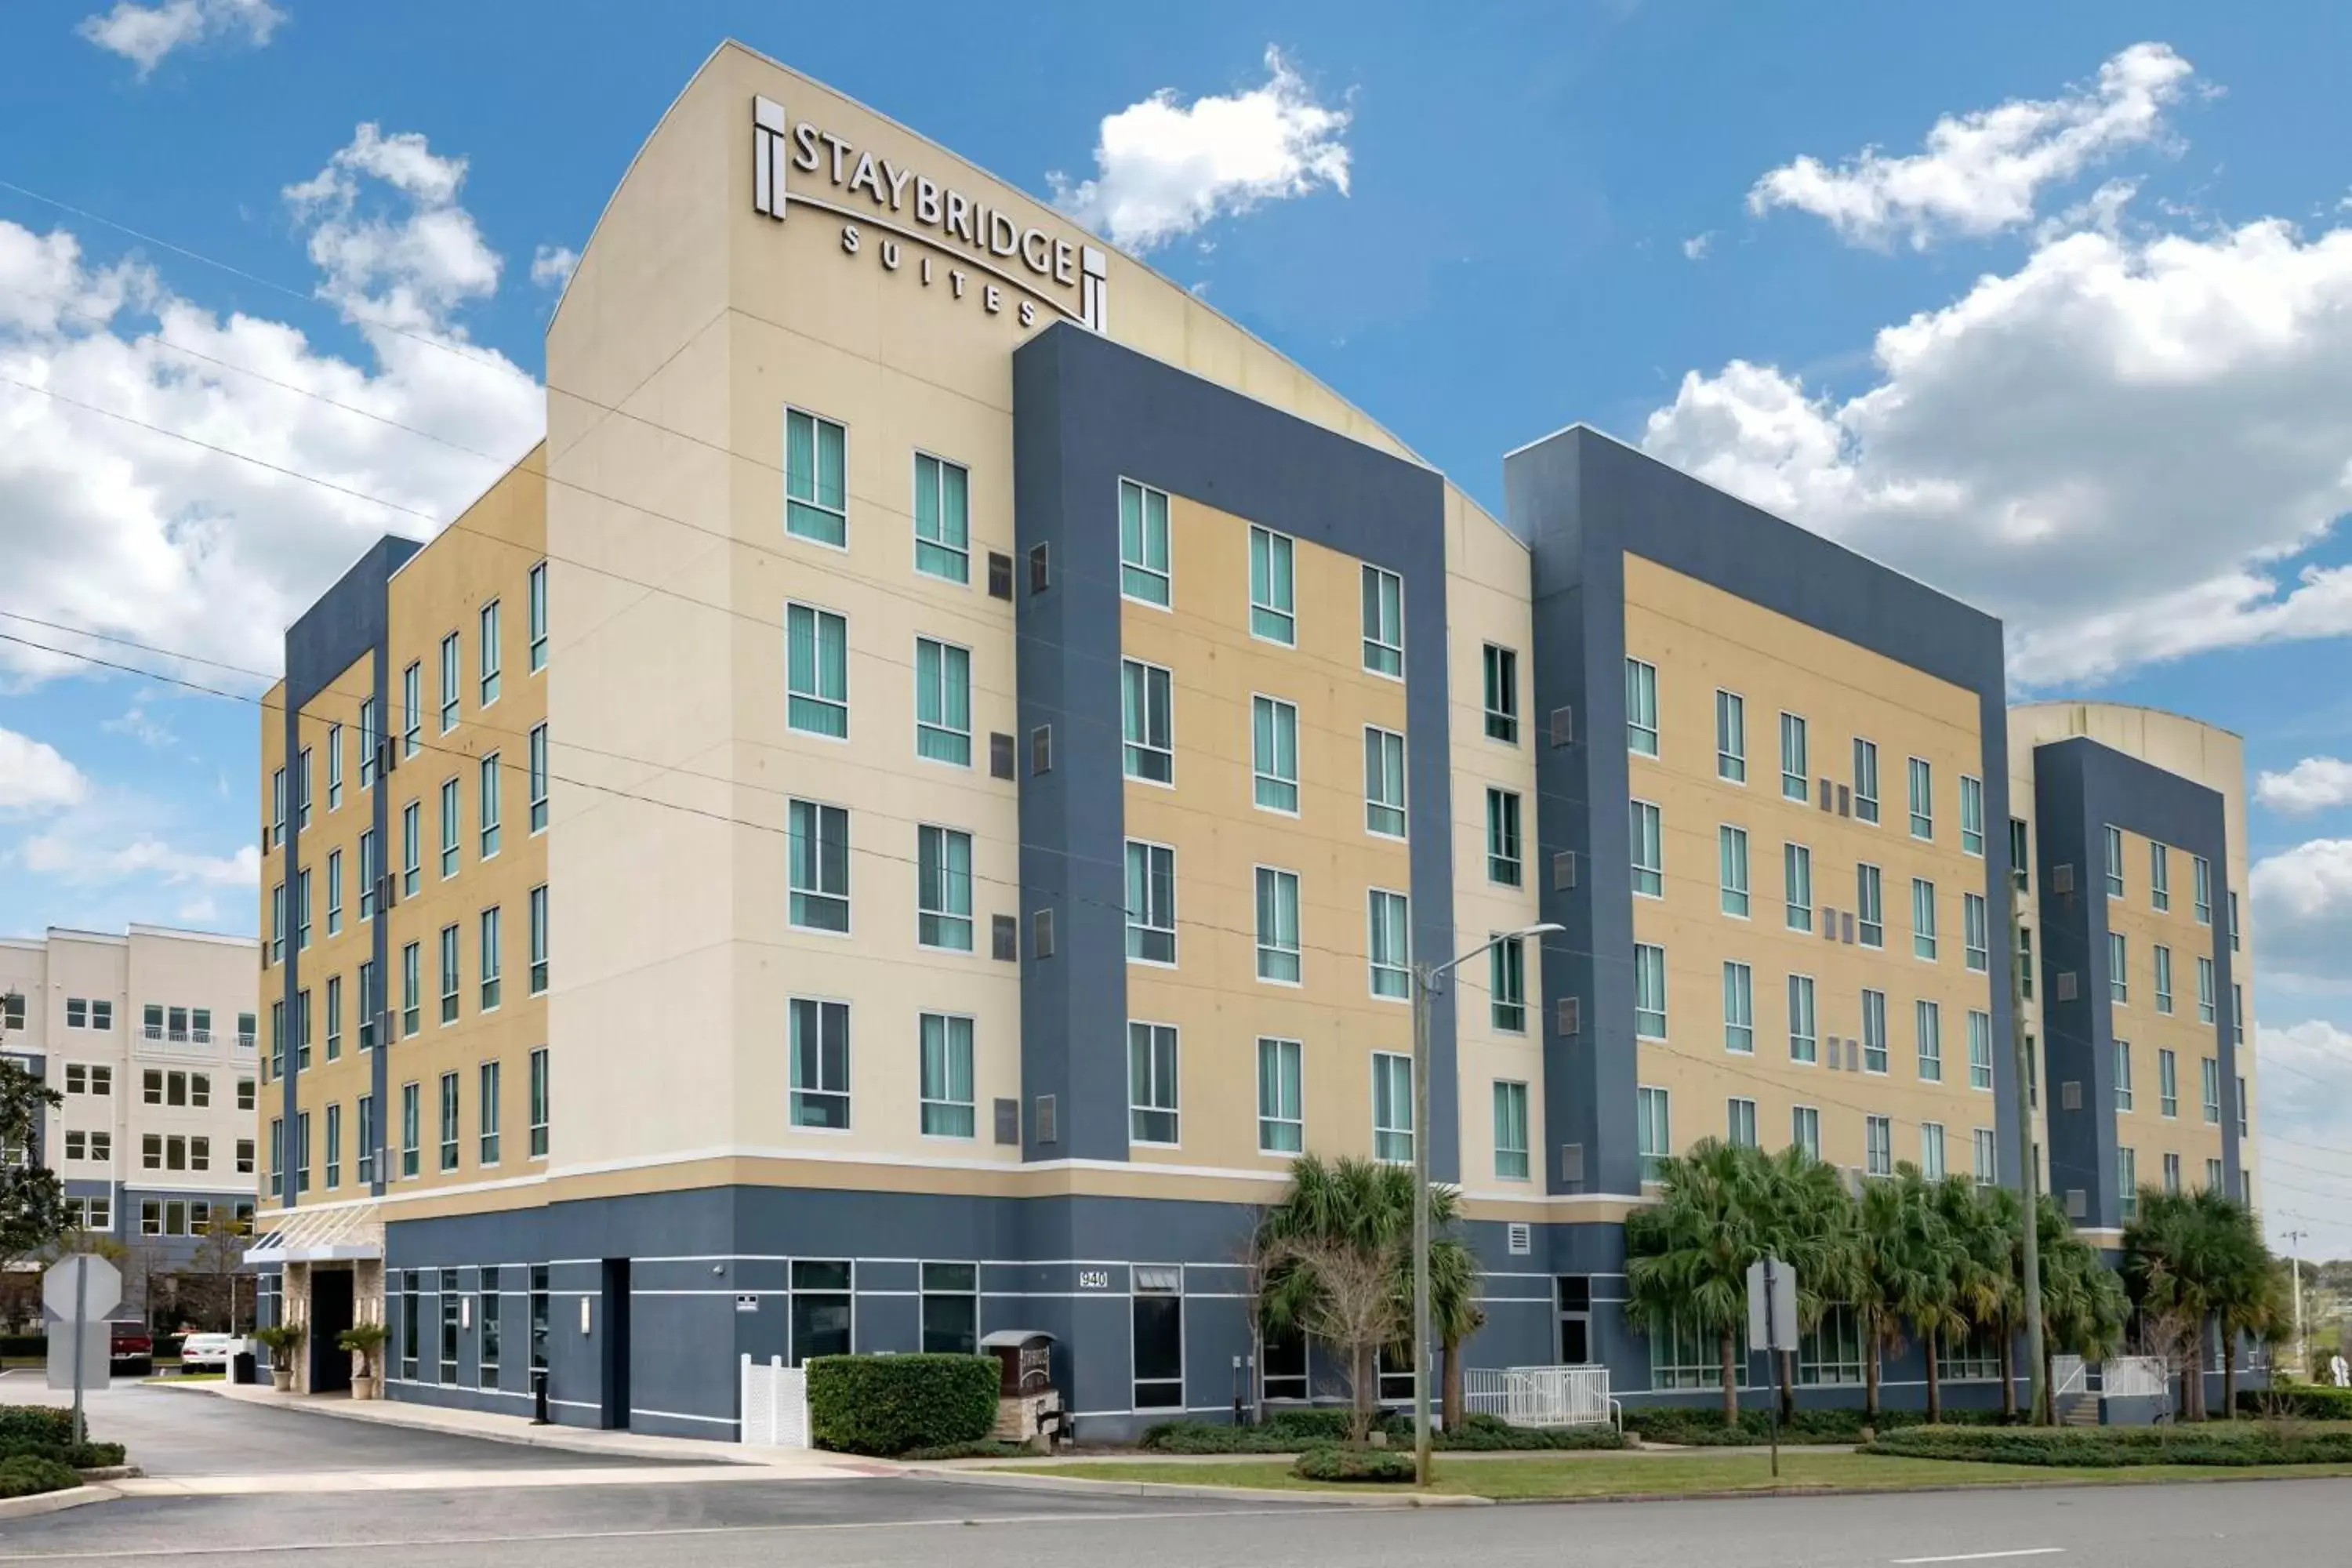 Property building in Staybridge Suites St. Petersburg FL, an IHG Hotel